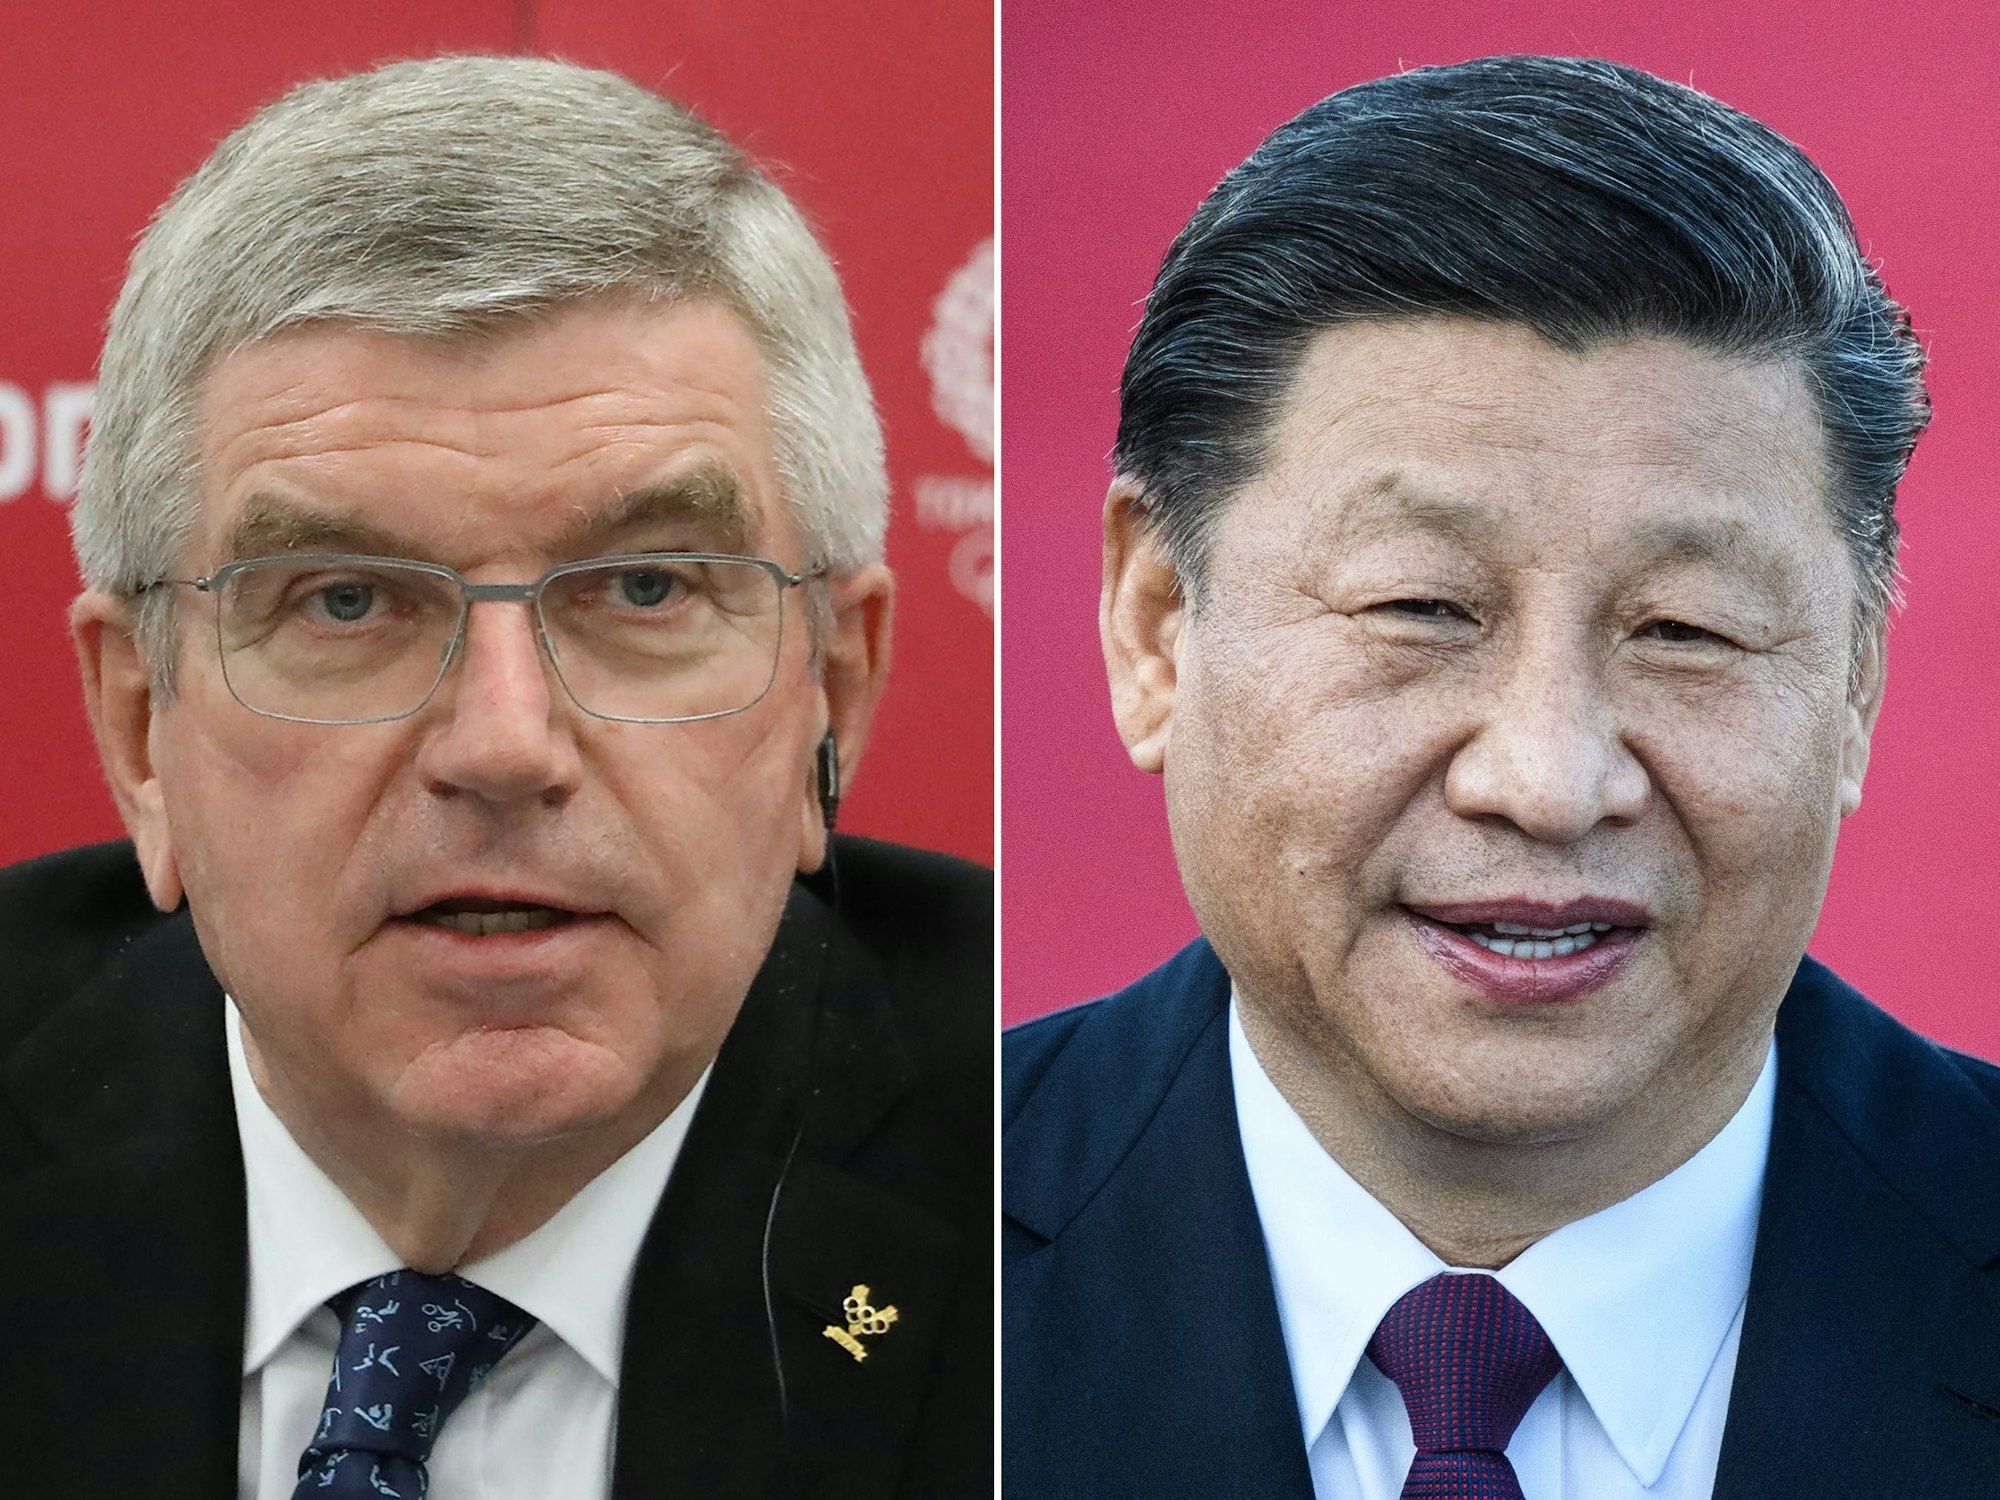 Foto-Kombination mit Thomas Bach (l) und Xi Jinping.